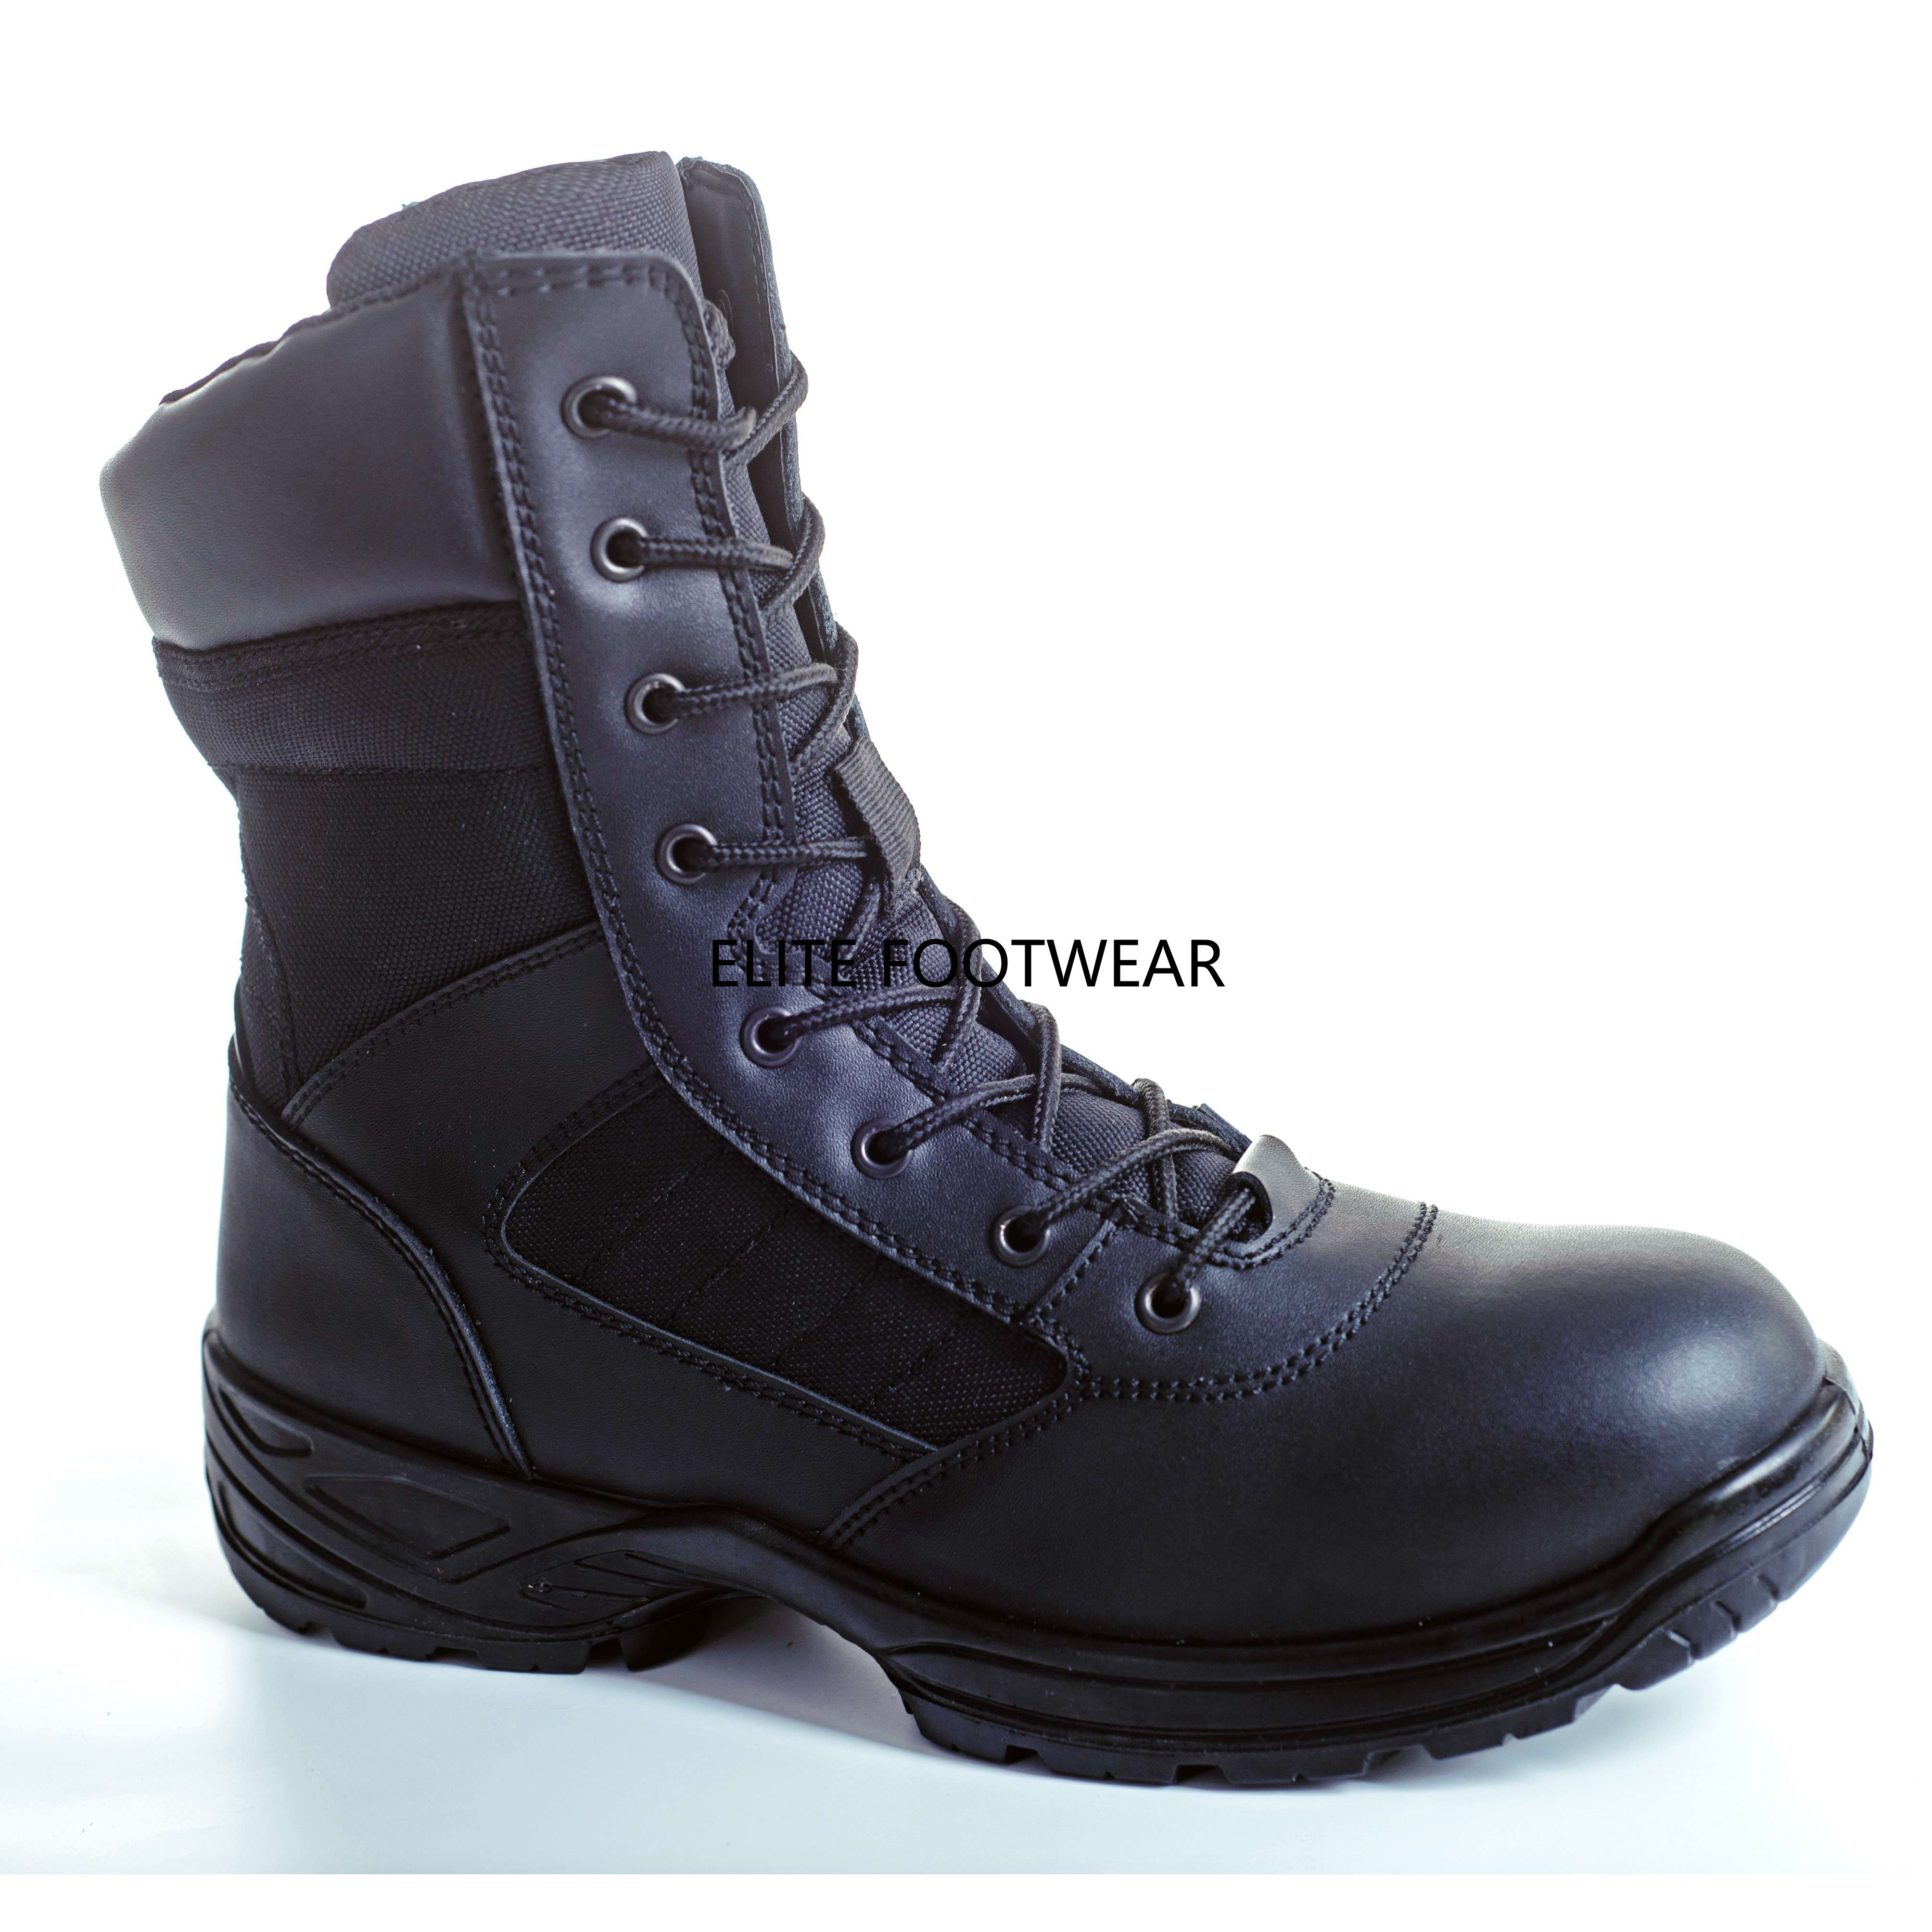 Comfortable Labor Insurance Leather pu Anti-Smashing Anti-Piercing Non-Slip Work Industrial Safety shoes Botas de Seguridad